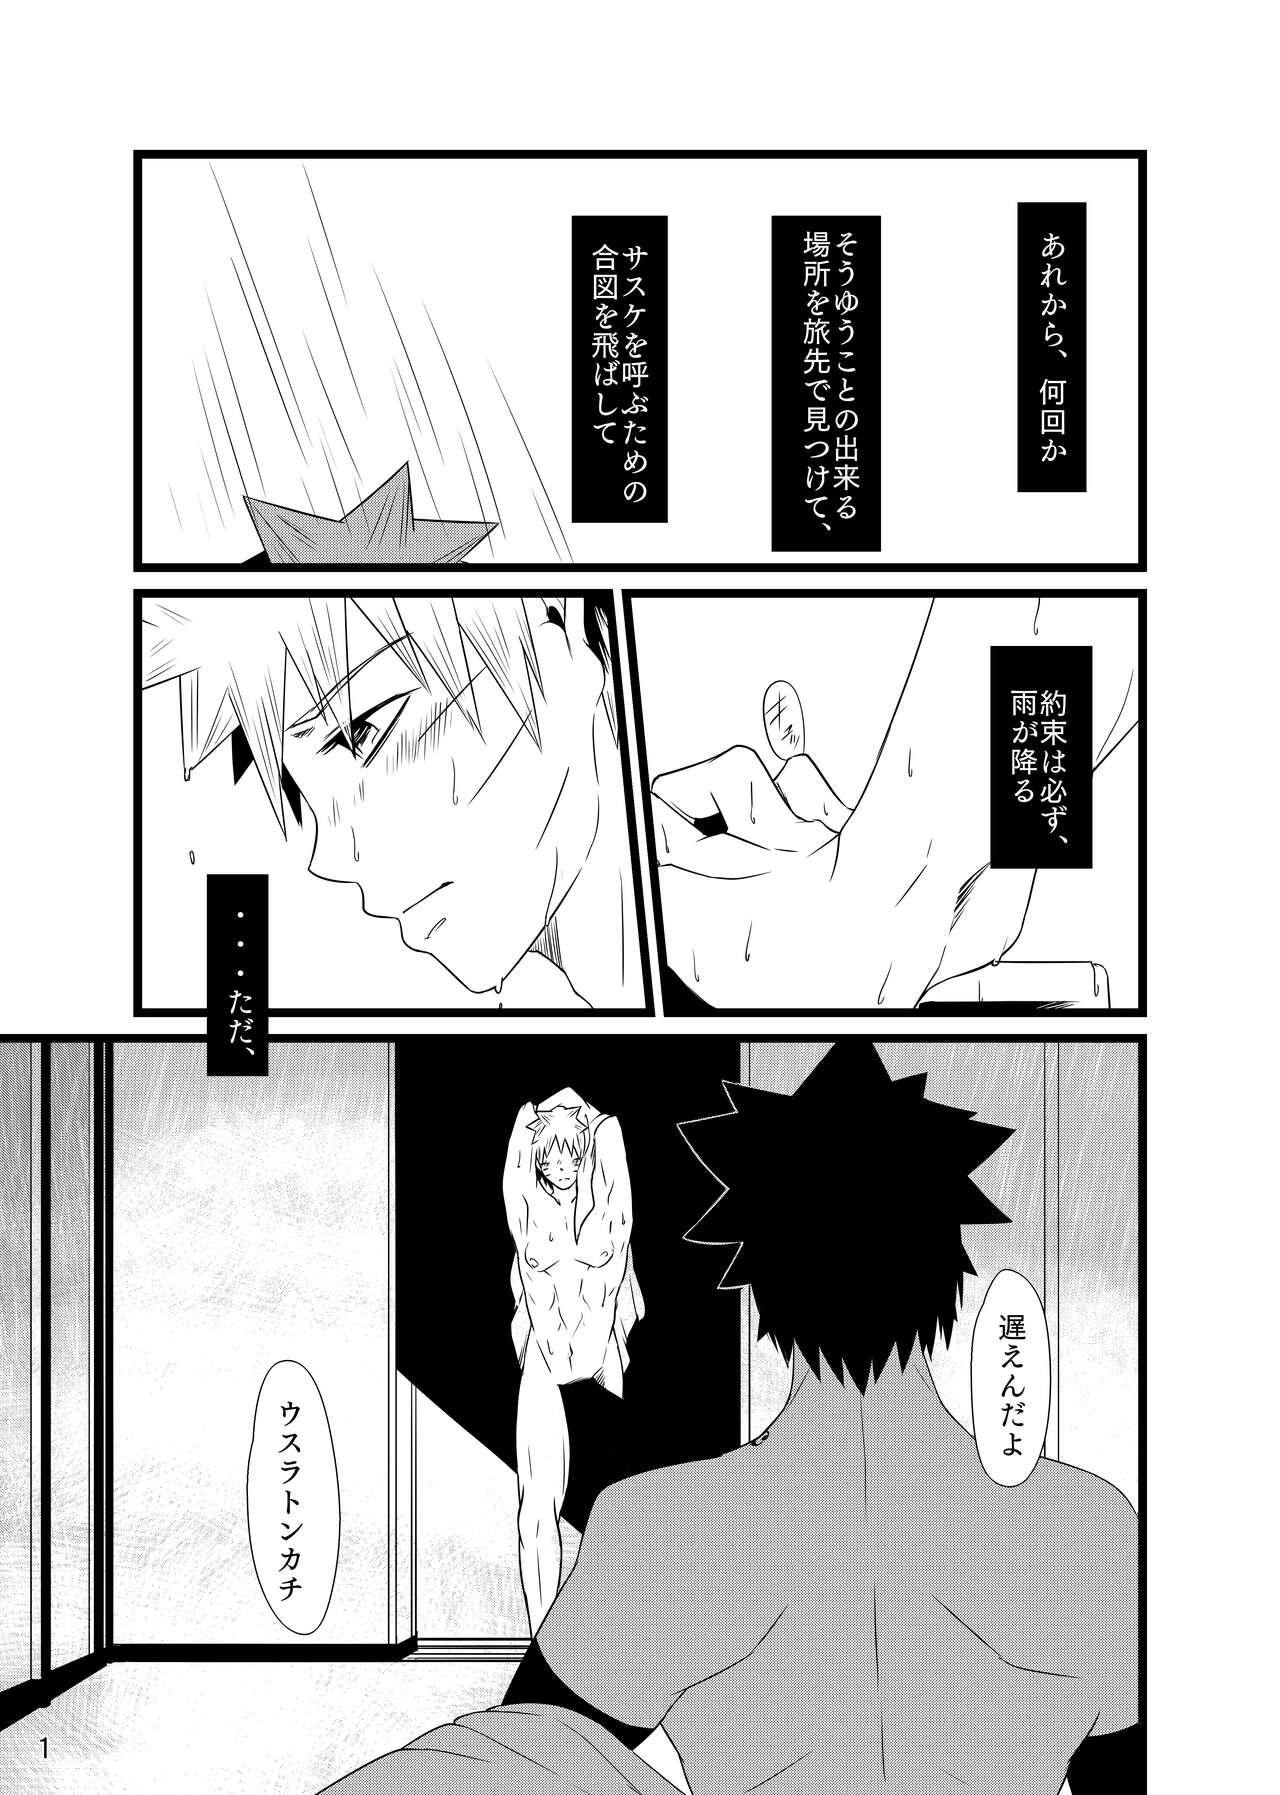 Foreplay Omae ni Namida wa Niawanai - Naruto Milfporn - Page 2